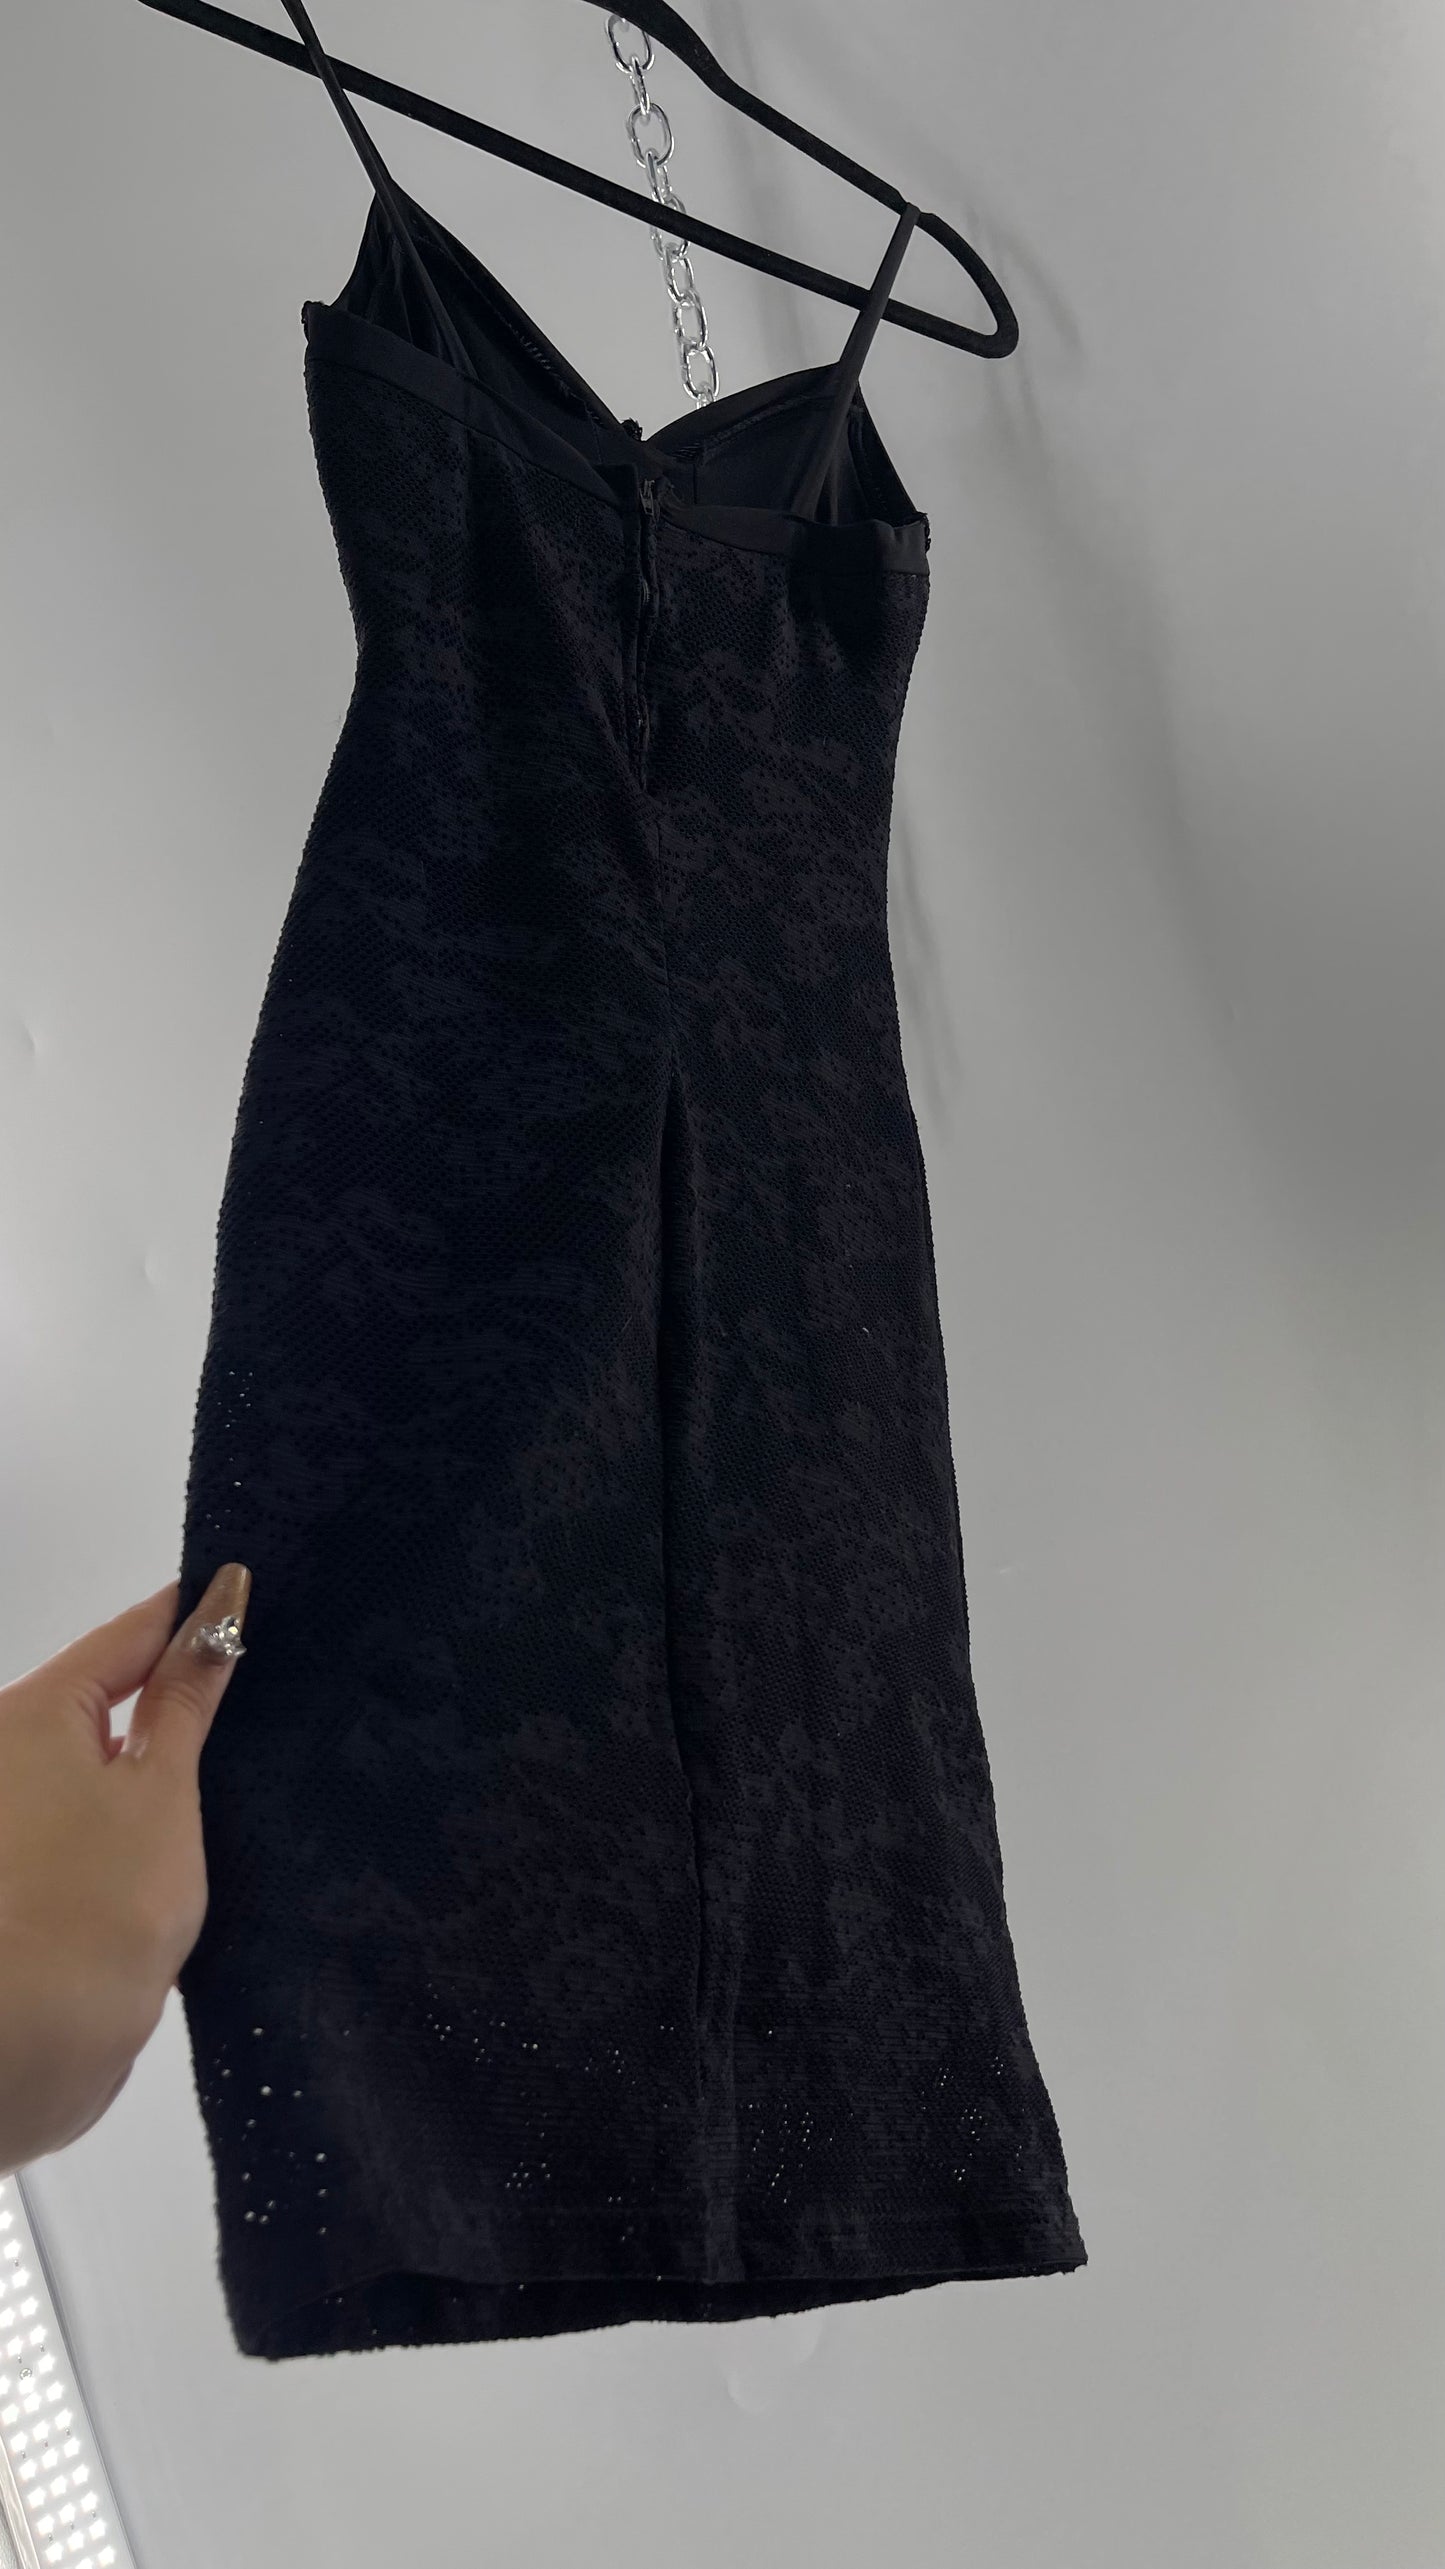 Vintage Black Lace Bodycon Dress with Sequin Underbust Detailing (XS)